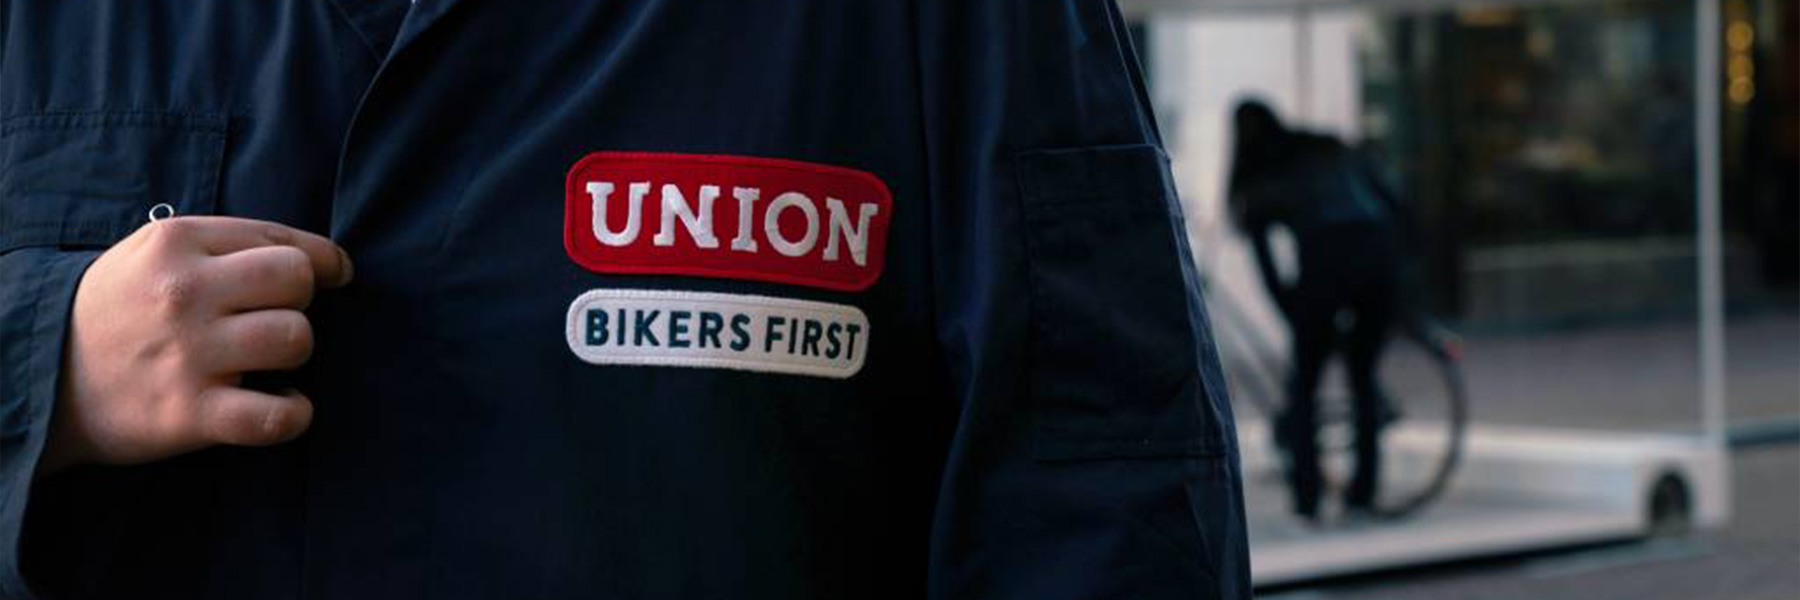 Union bikers first pak